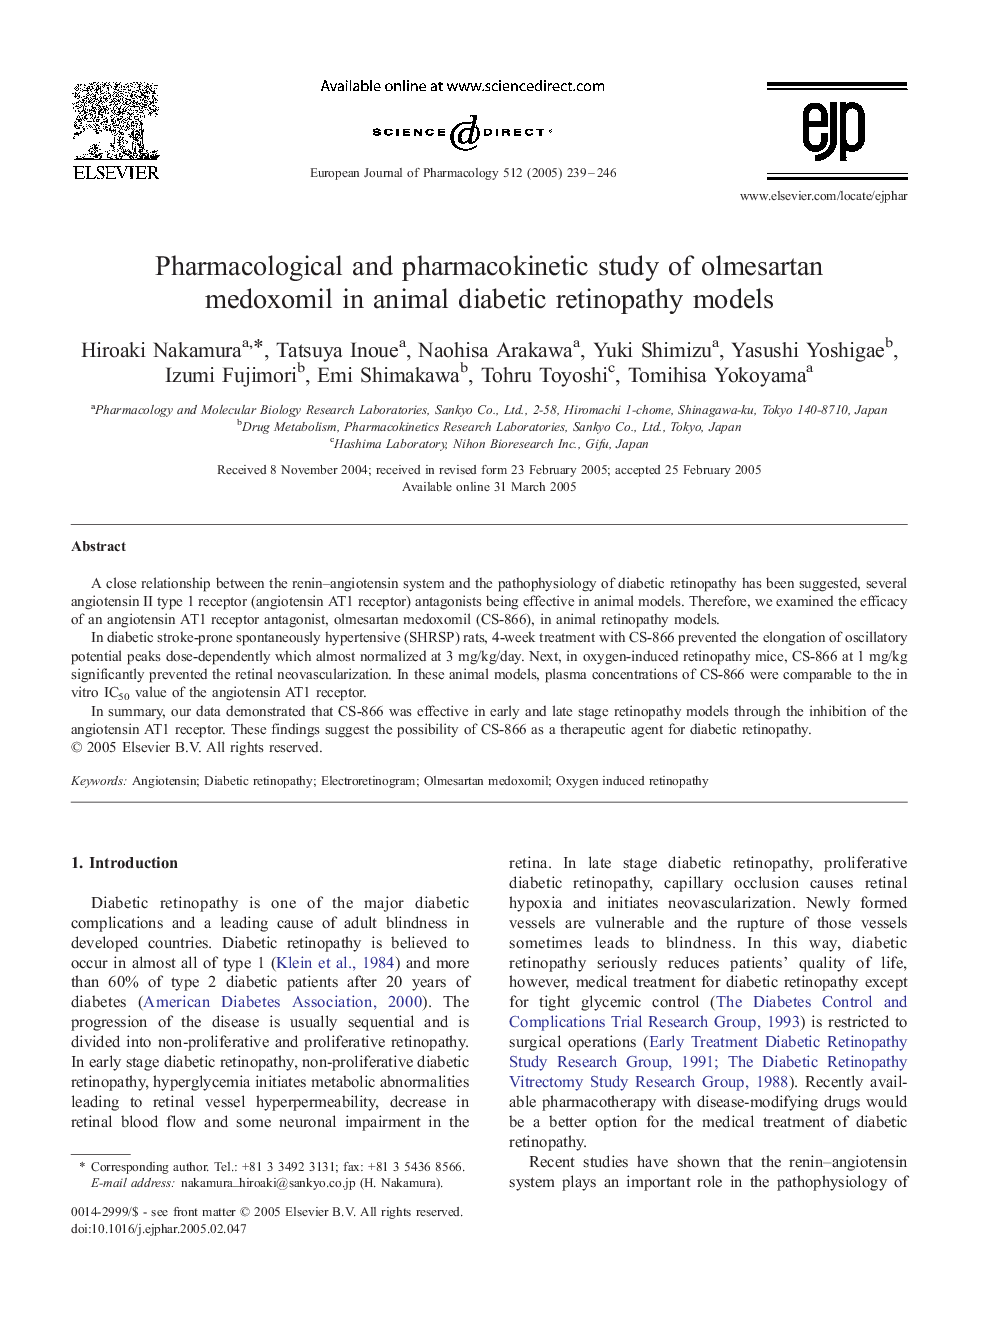 Pharmacological and pharmacokinetic study of olmesartan medoxomil in animal diabetic retinopathy models